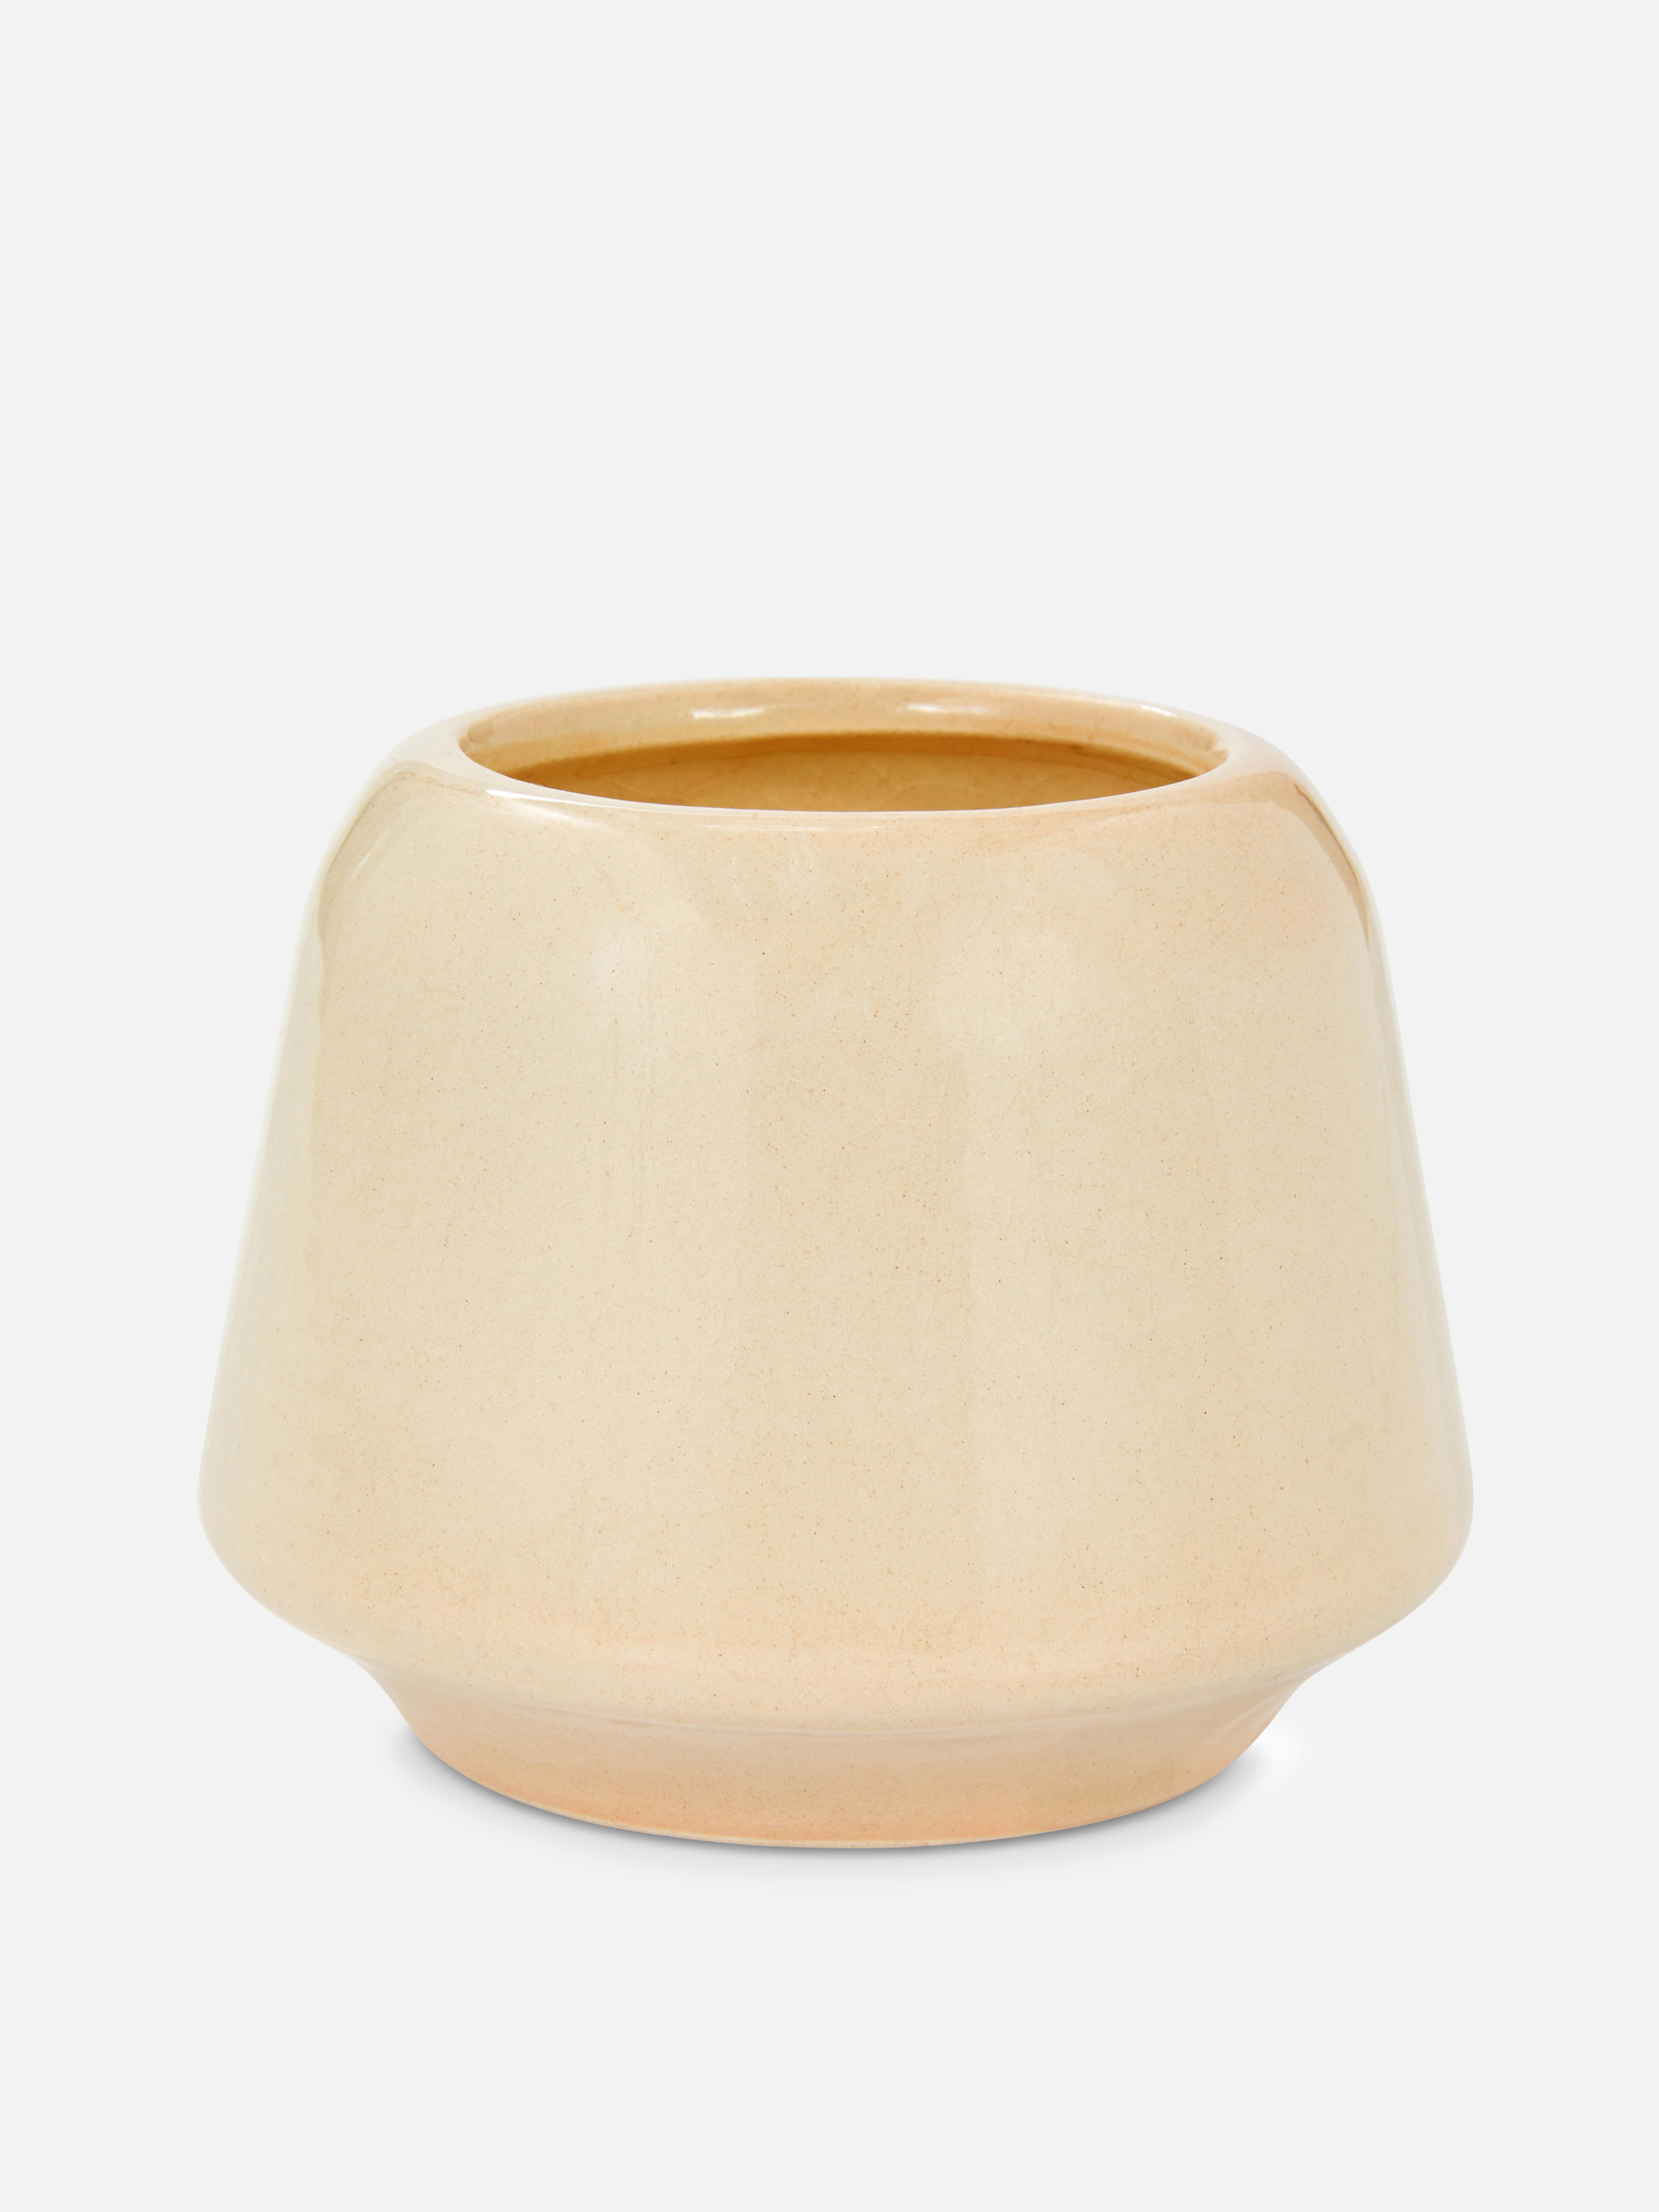 Kerze in rundem Keramikgefäß